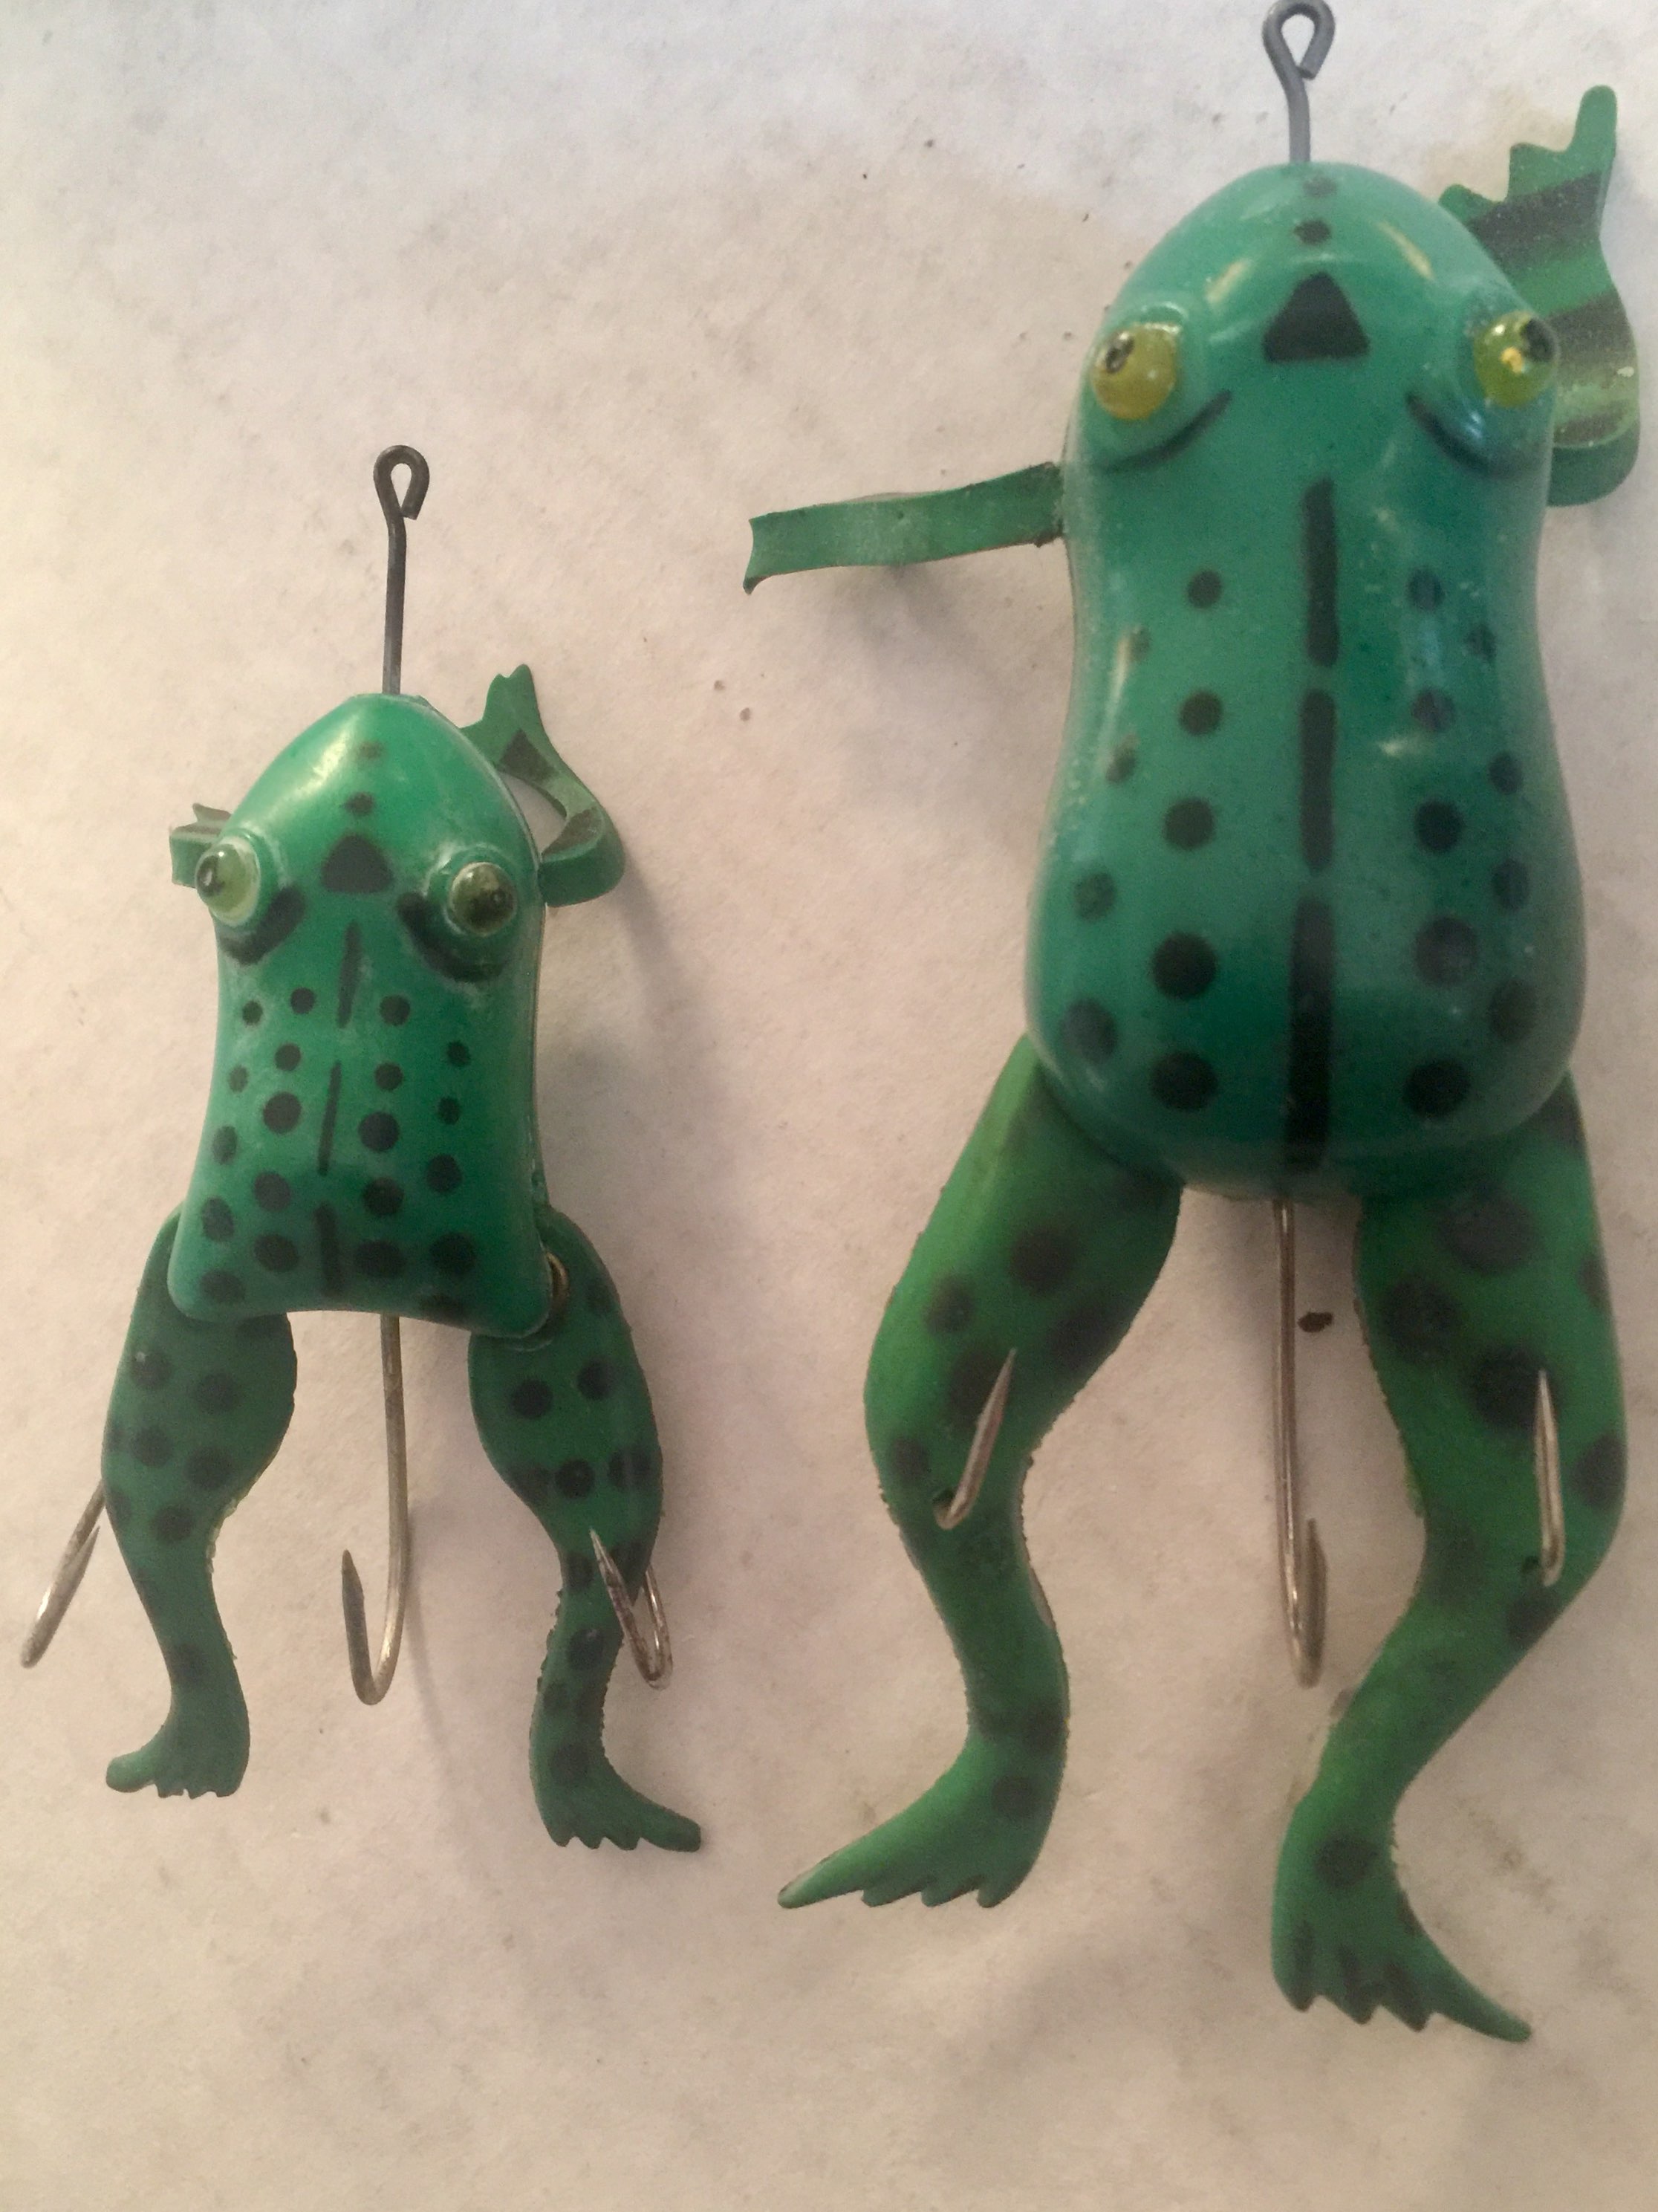 Vintage Halik Frog Jr. Antique Fishing Lure with movable legs, USA